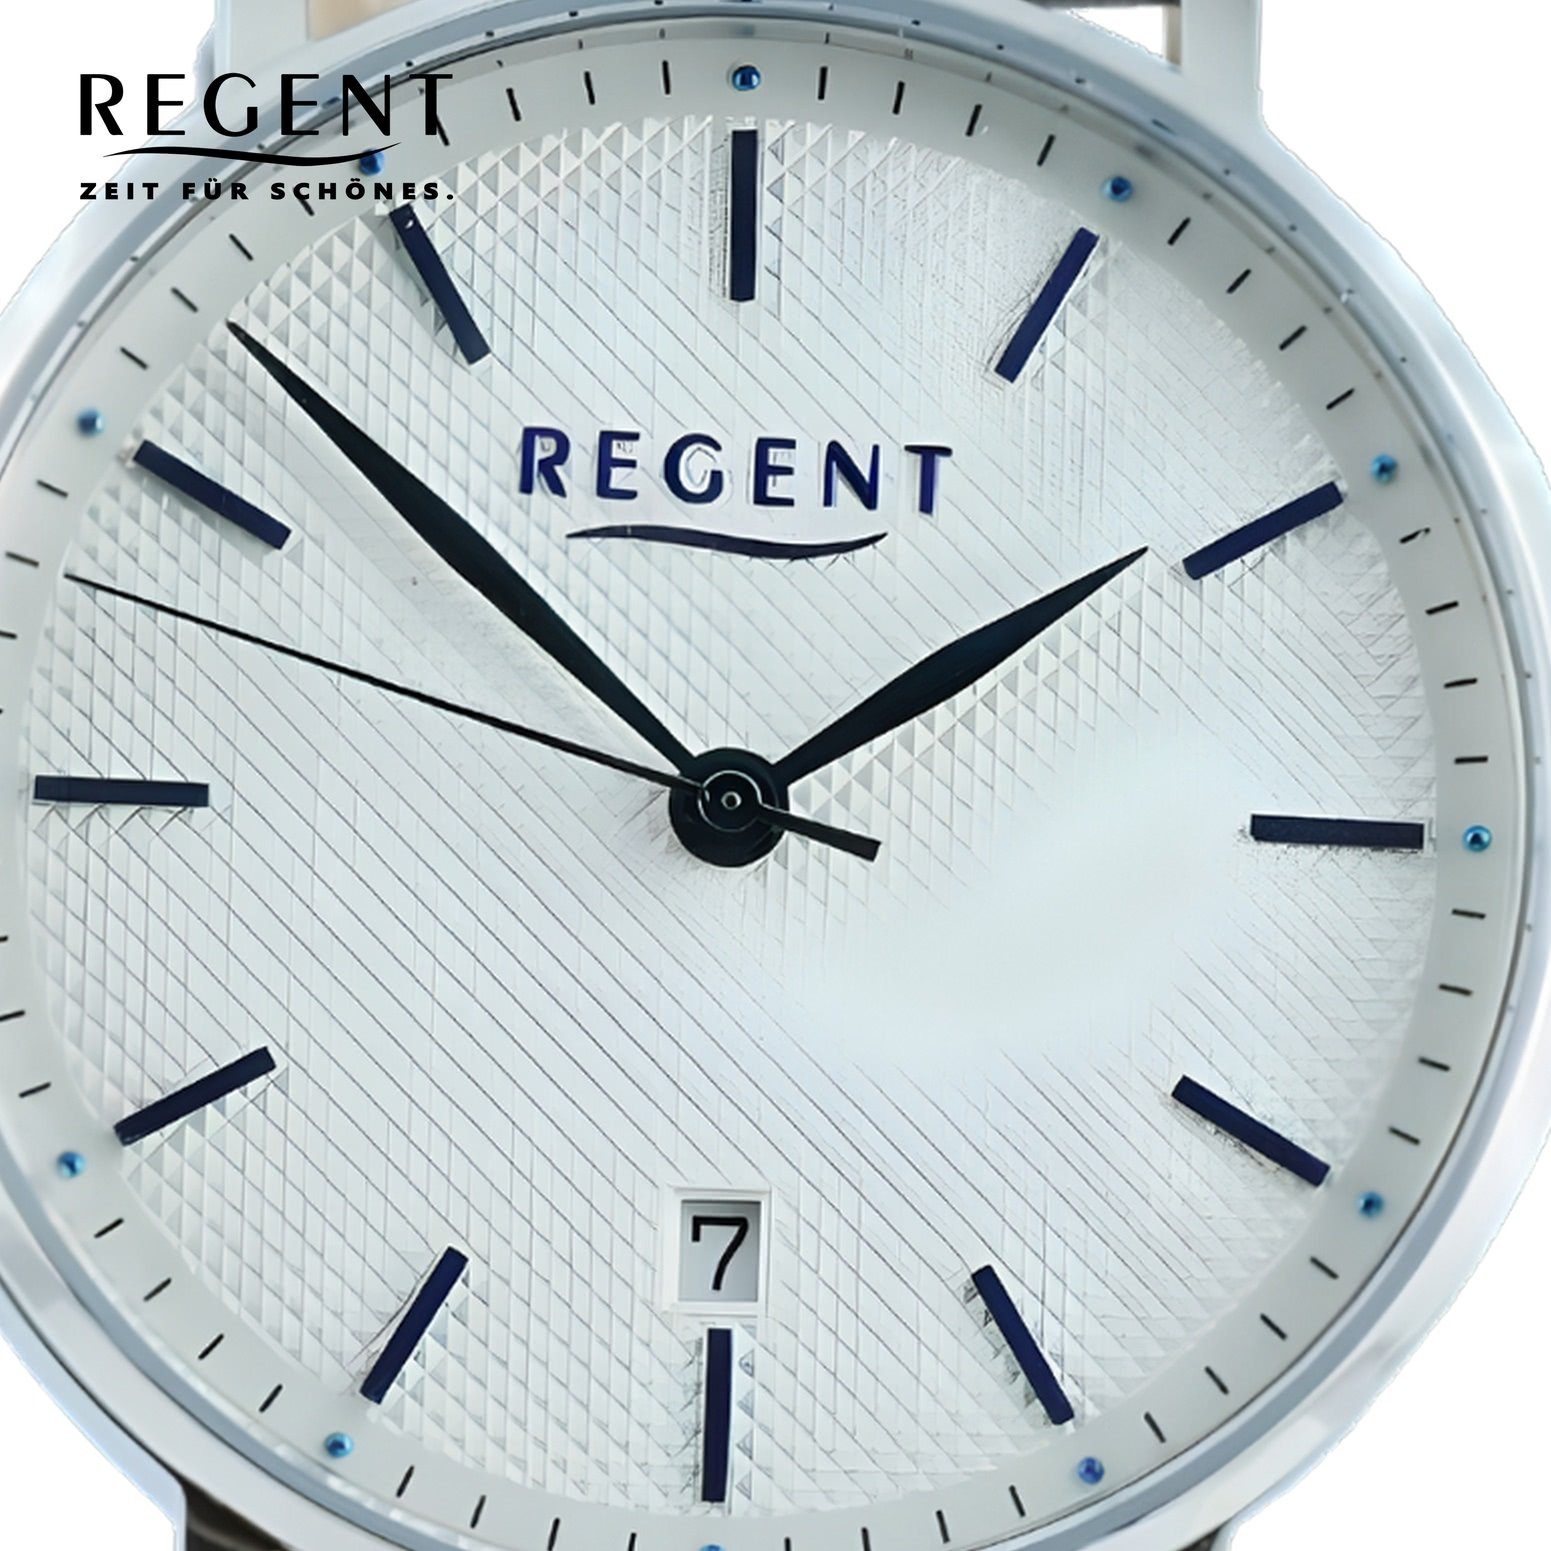 Regent Quarzuhr Herren rund, Regent Analog, groß (ca. Armbanduhr Armbanduhr Lederarmband Herren 39mm), extra